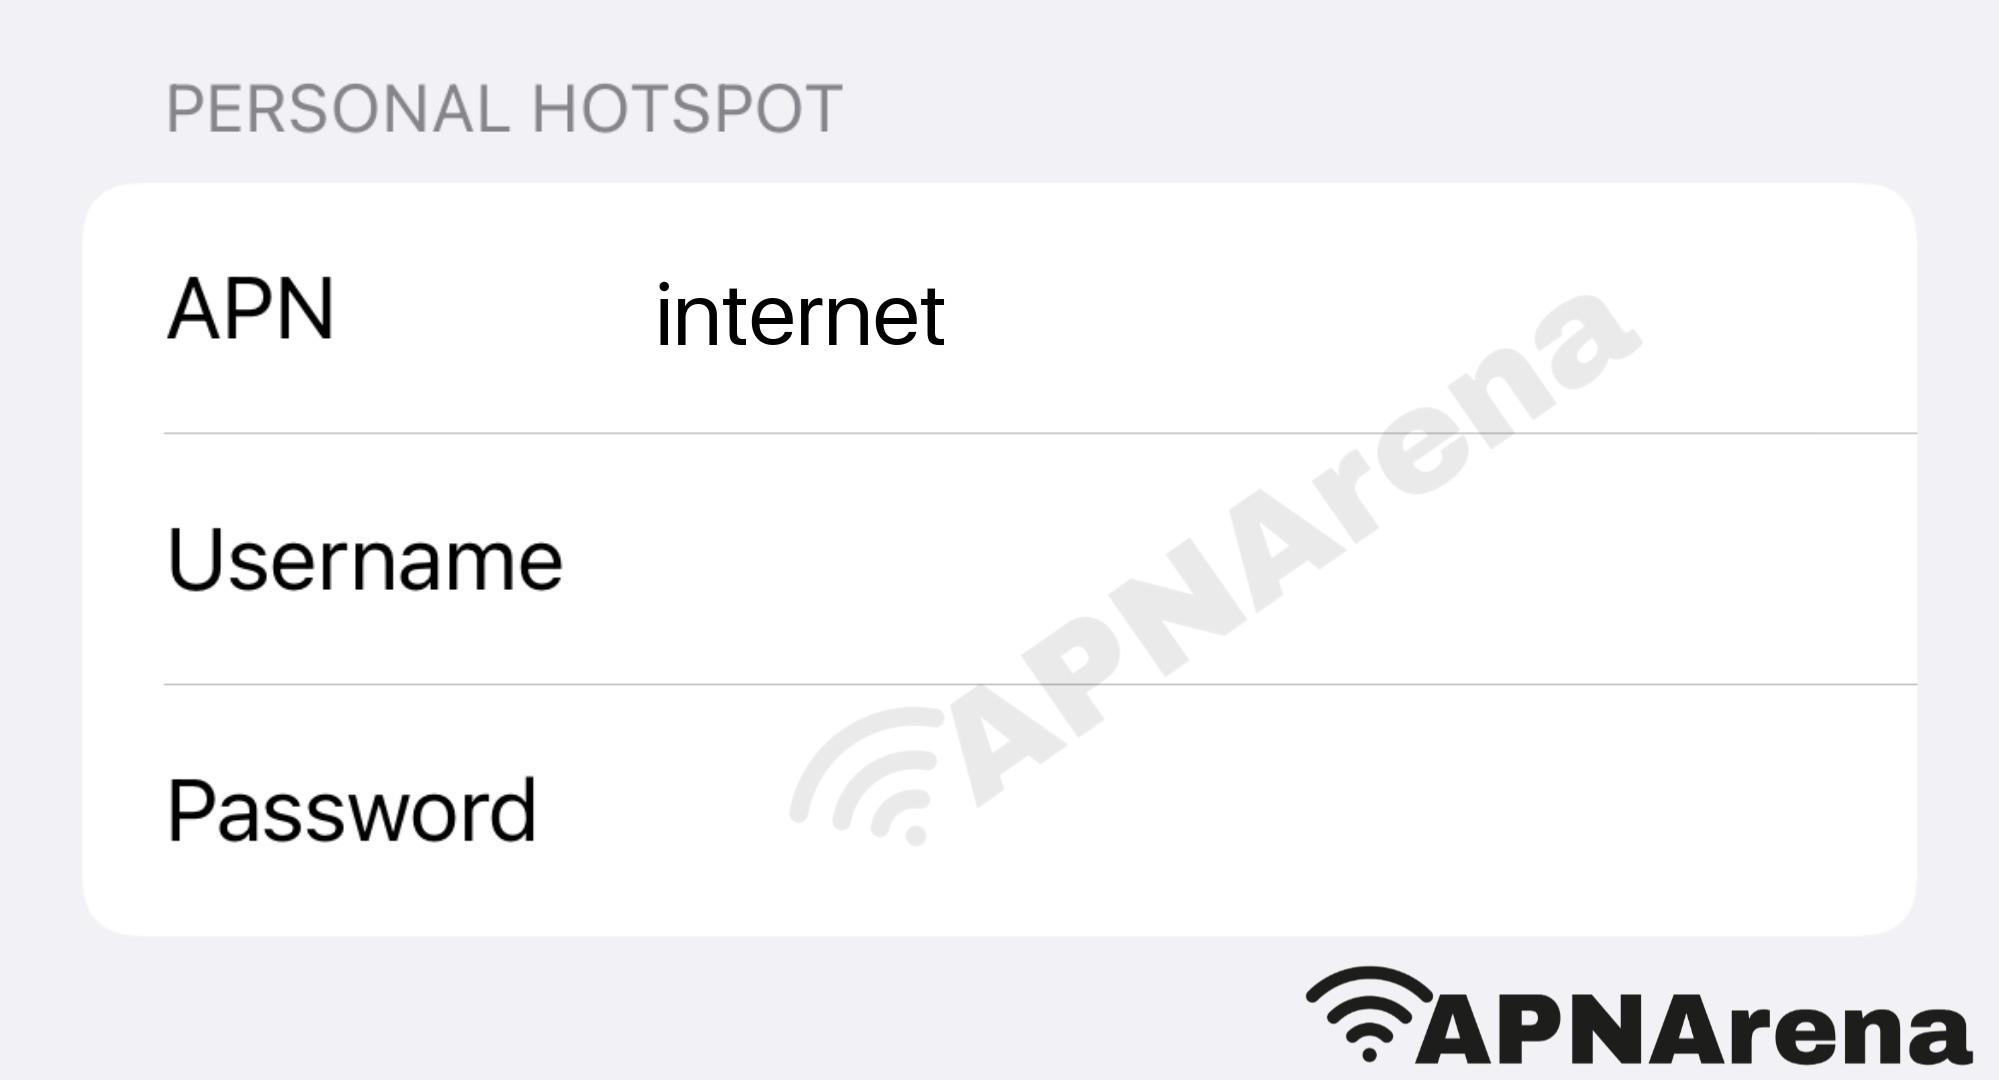 Globe Telecom Personal Hotspot Settings for iPhone